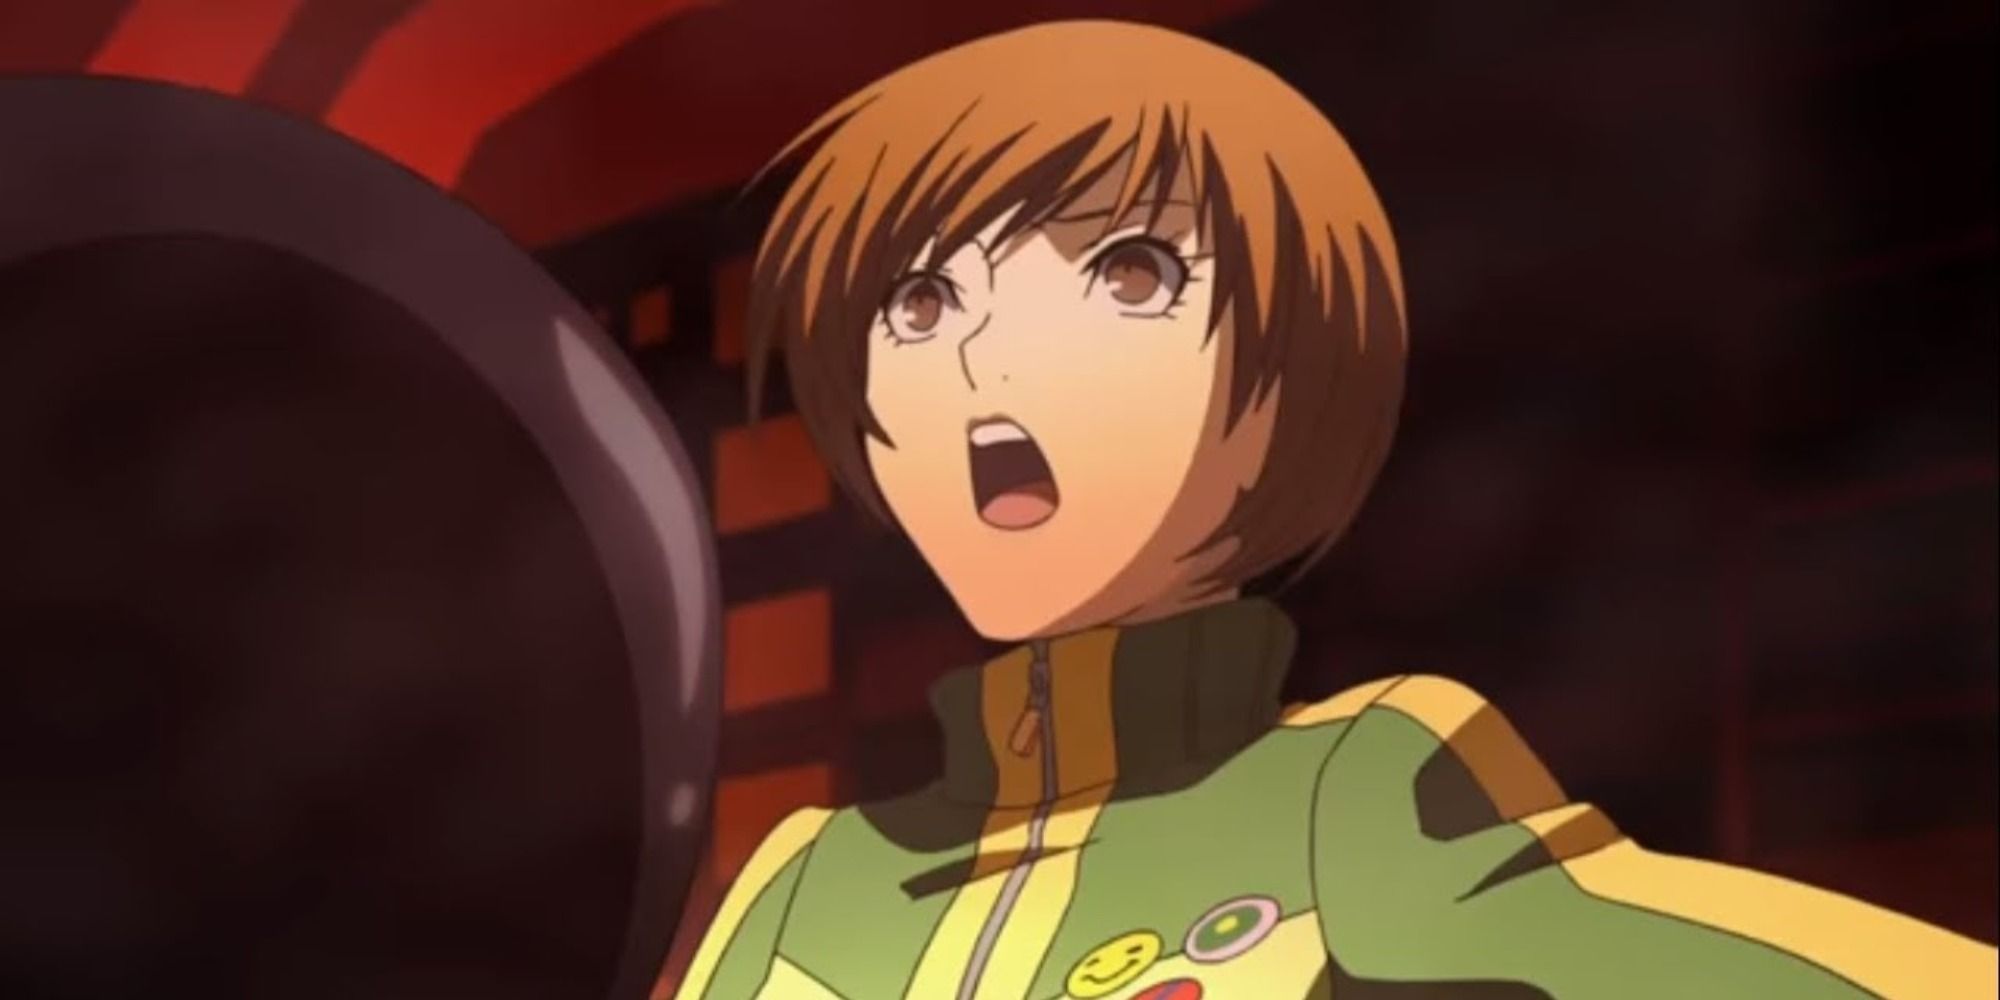 Chie Satonaka shouting in the Persona 4 Golden anime